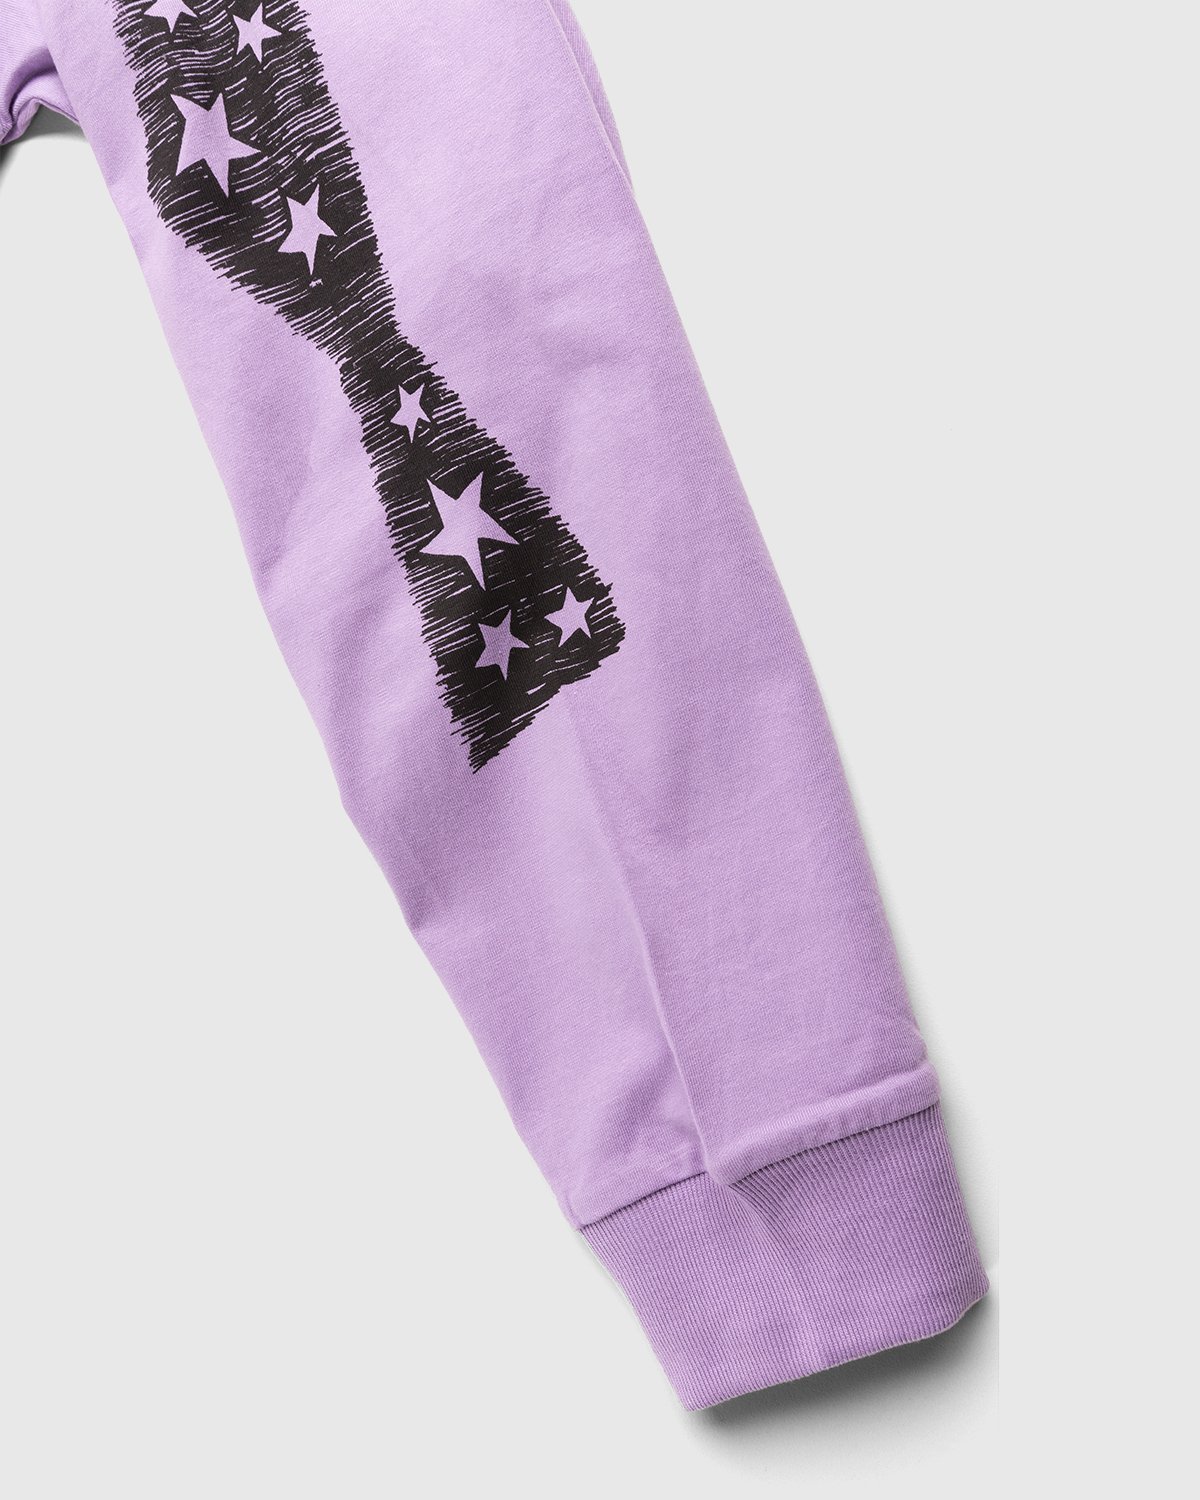 Story mfg. - Grateful Tee LS Lilac Sleepyhead - Clothing - Purple - Image 5